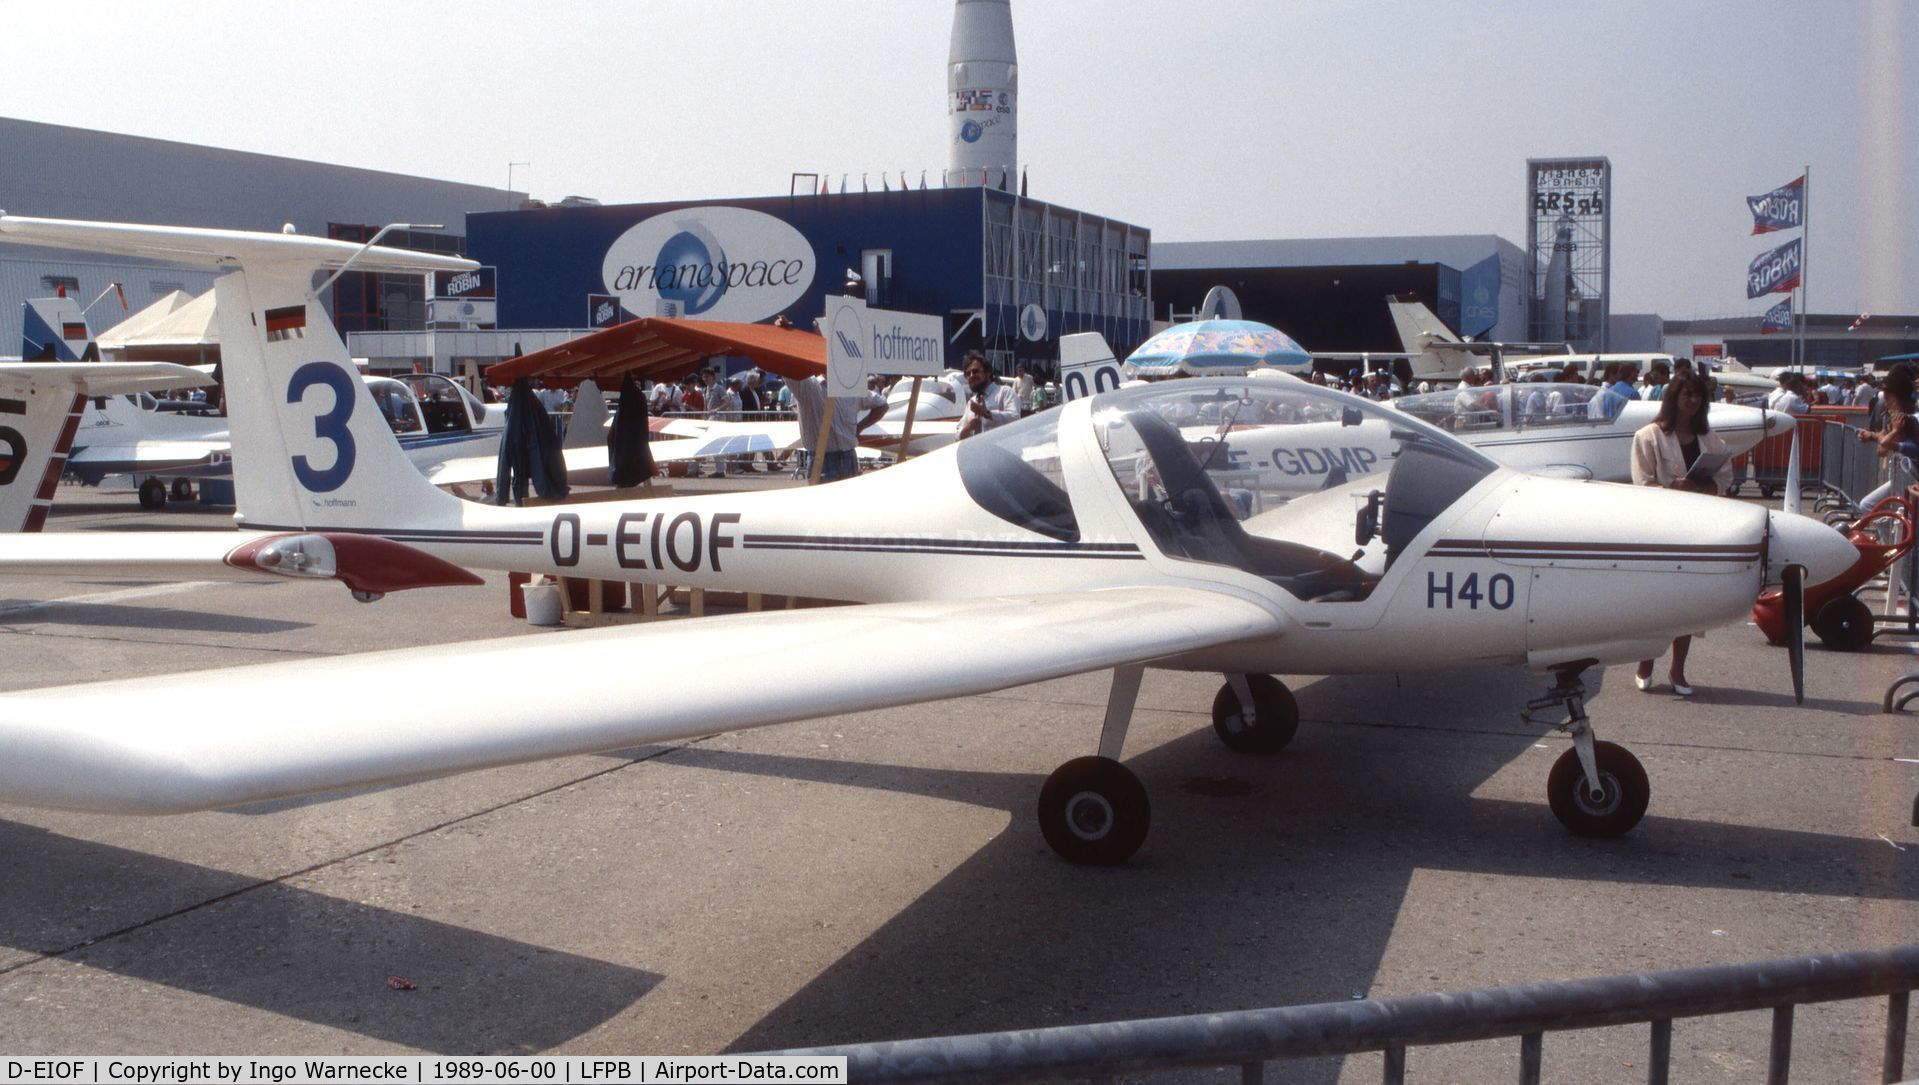 D-EIOF, 1988 Hoffmann H-40 C/N 01, Hoffmann H-40 first prototype at Aerosalon Paris 1989